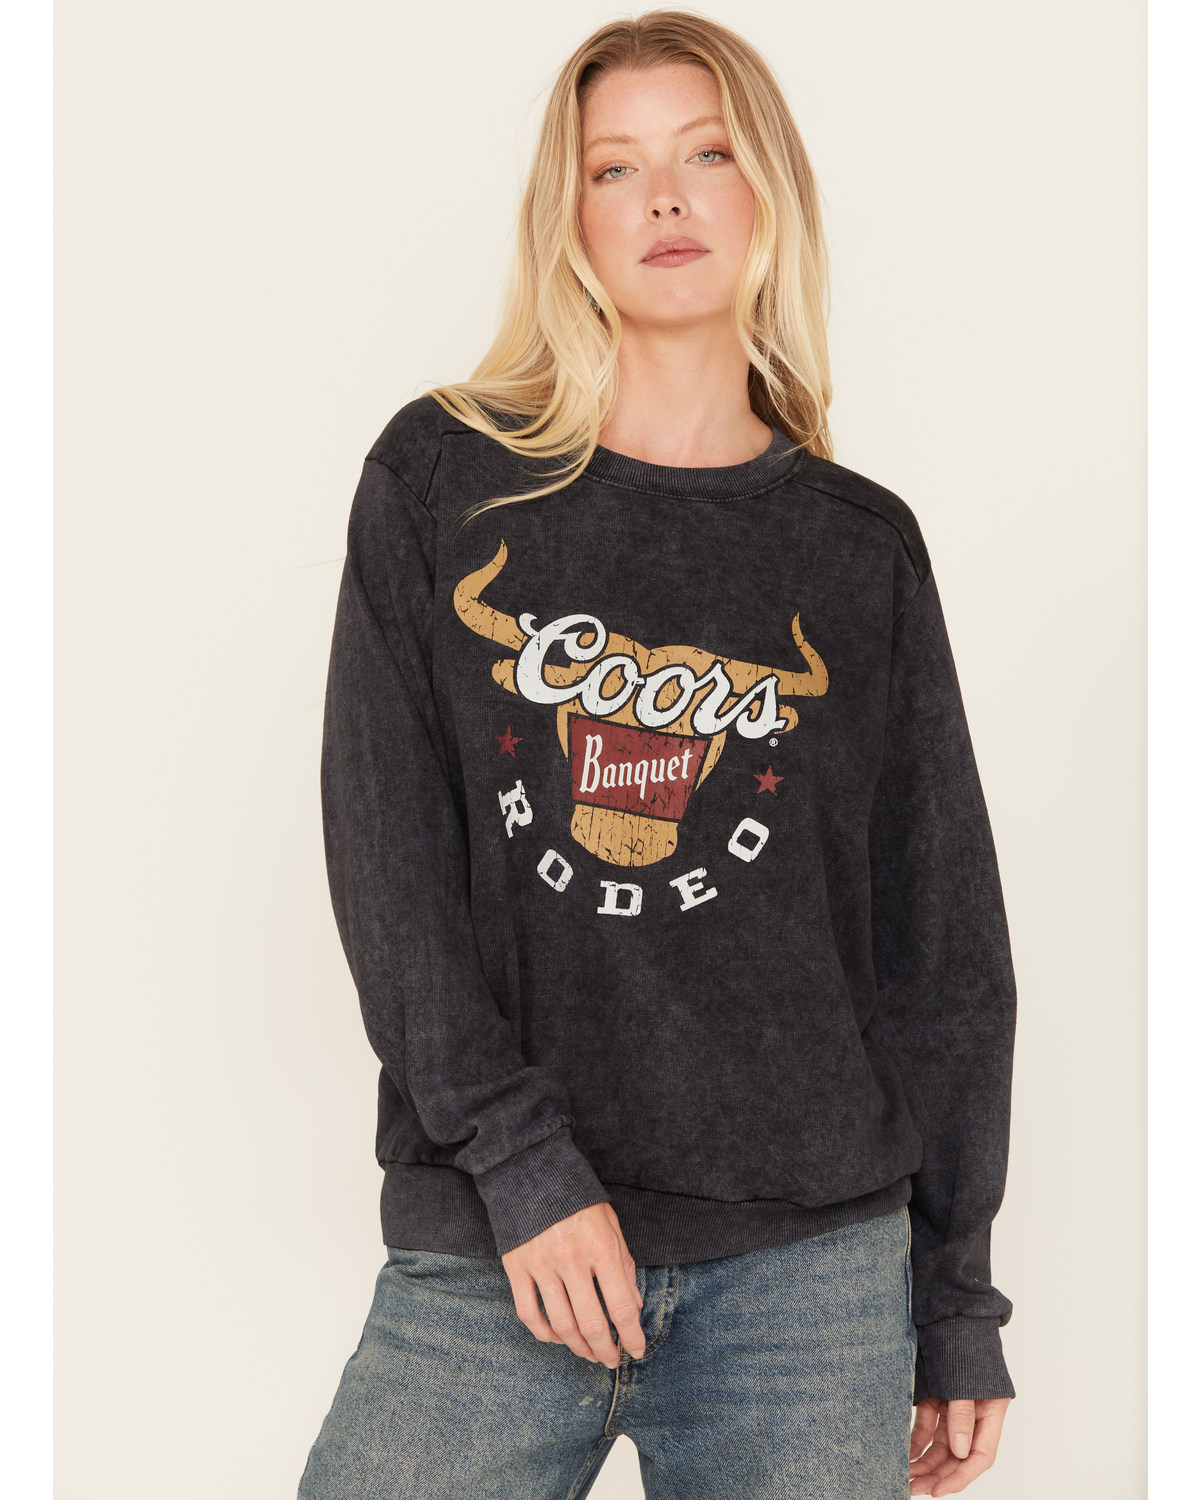 Changes Women's Coors Rodeo Mineral Wash Crewneck Sweatshirt